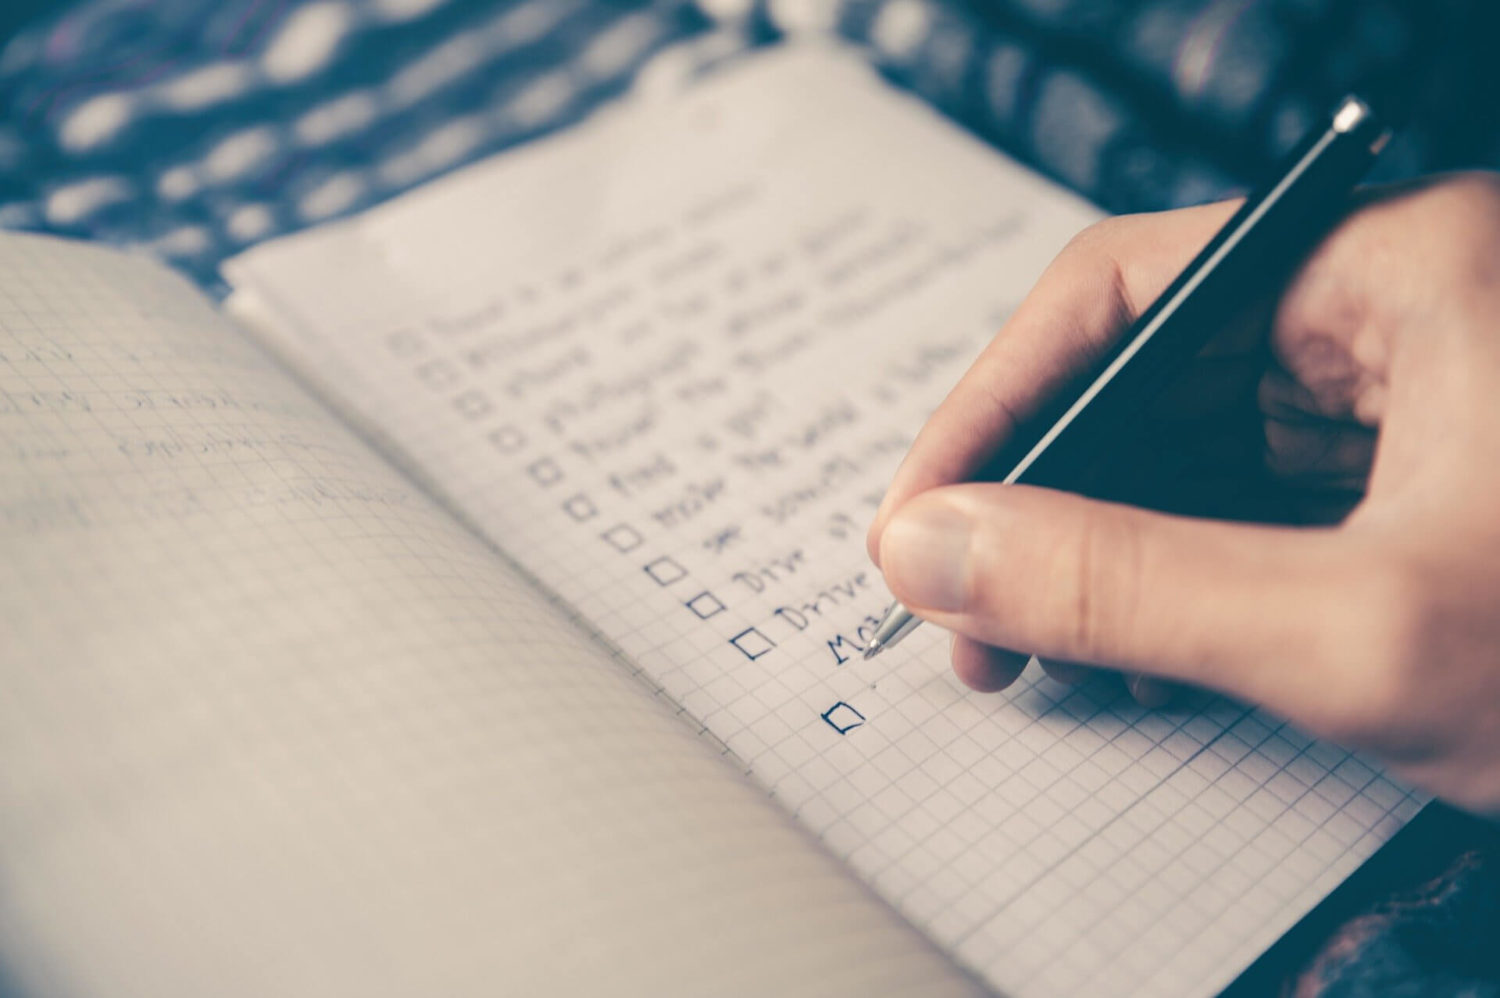 Making Lists Keeps You Organised